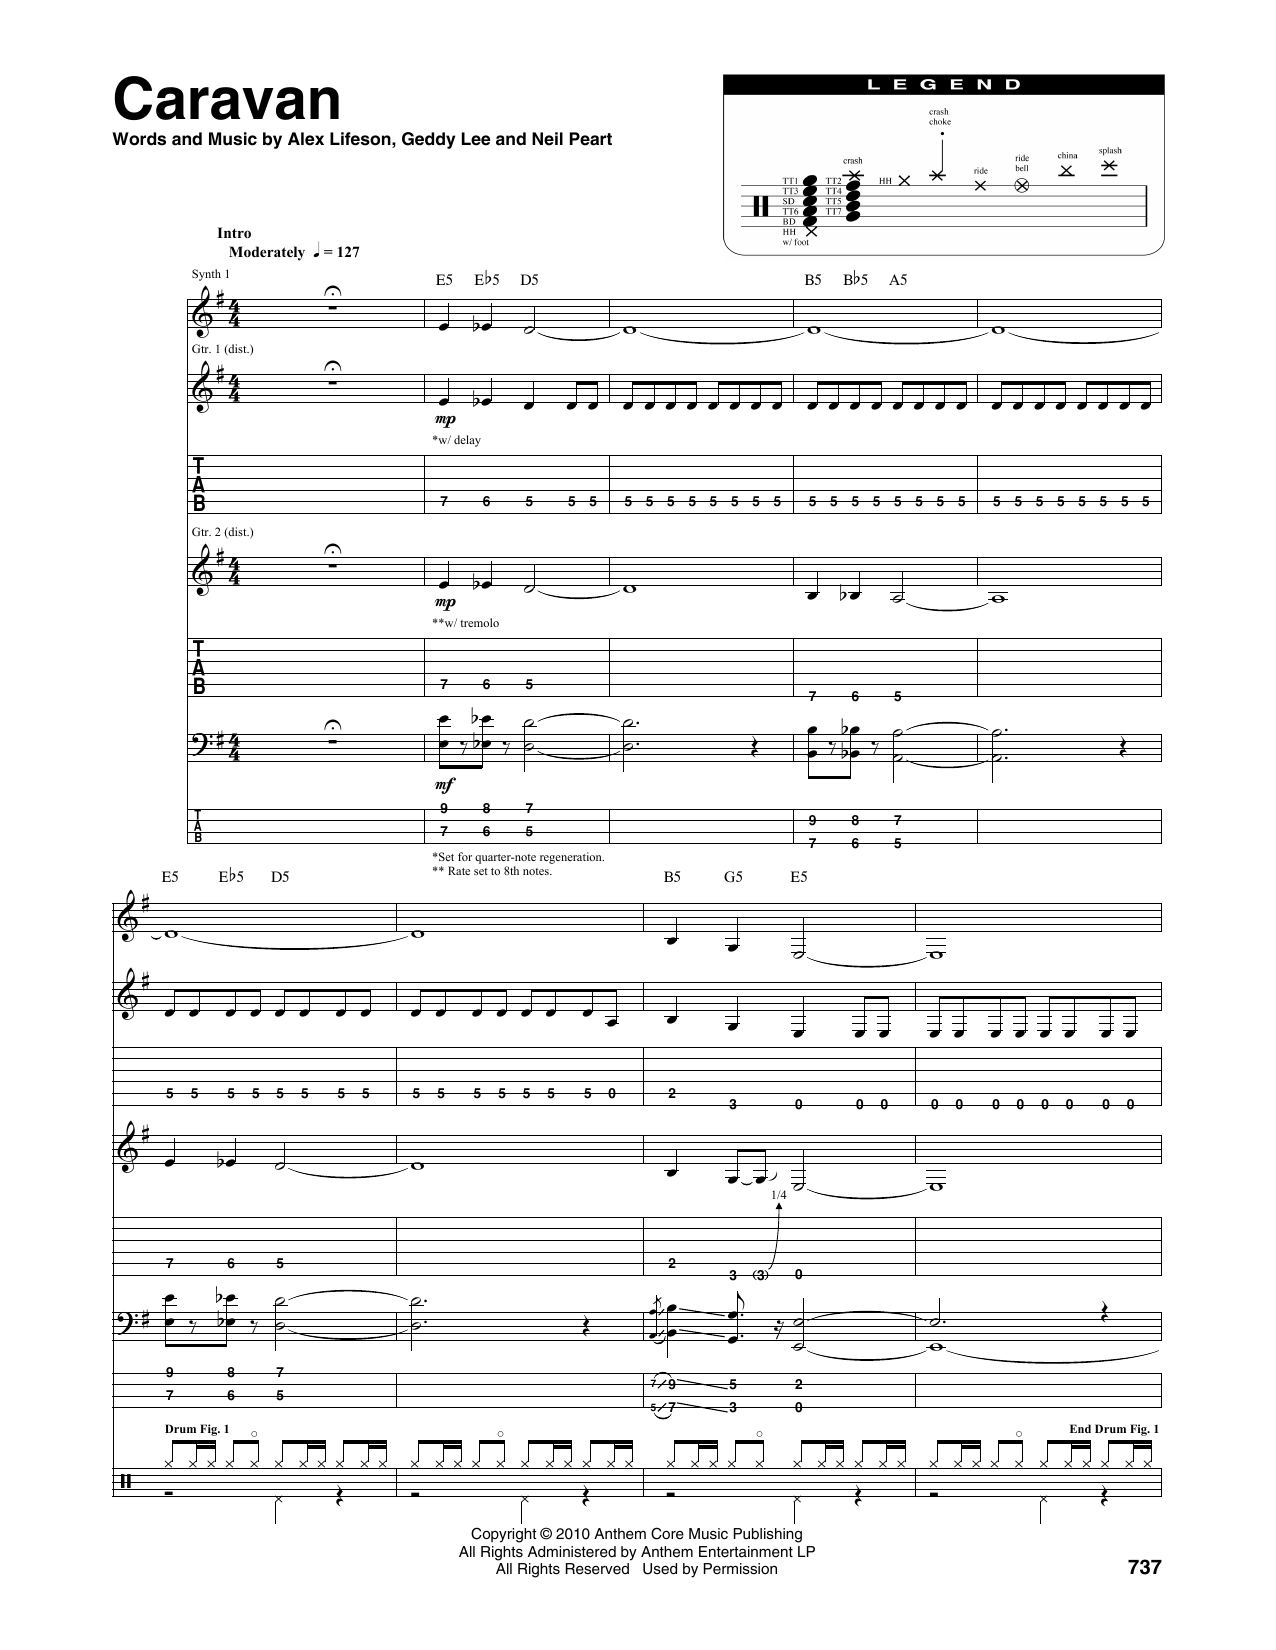 Rush Caravan Sheet Music Notes & Chords for Transcribed Score - Download or Print PDF